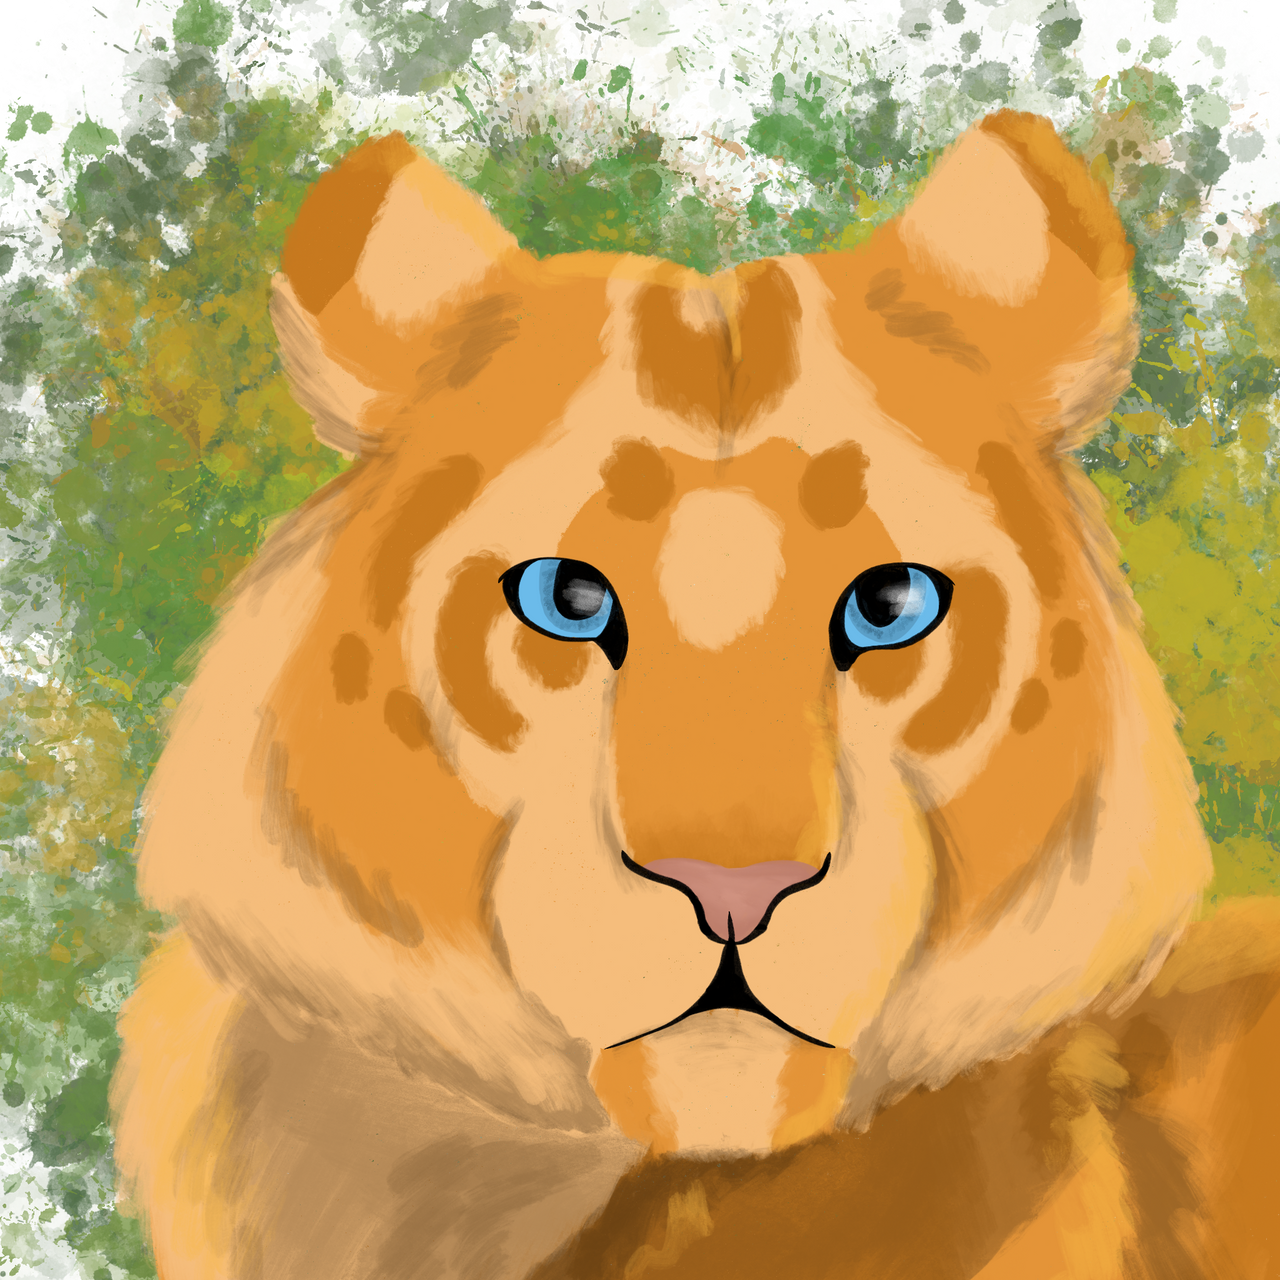 The Golden Tiger [Creatures of Sonaria X MLP] by EsmirDreemurr on DeviantArt